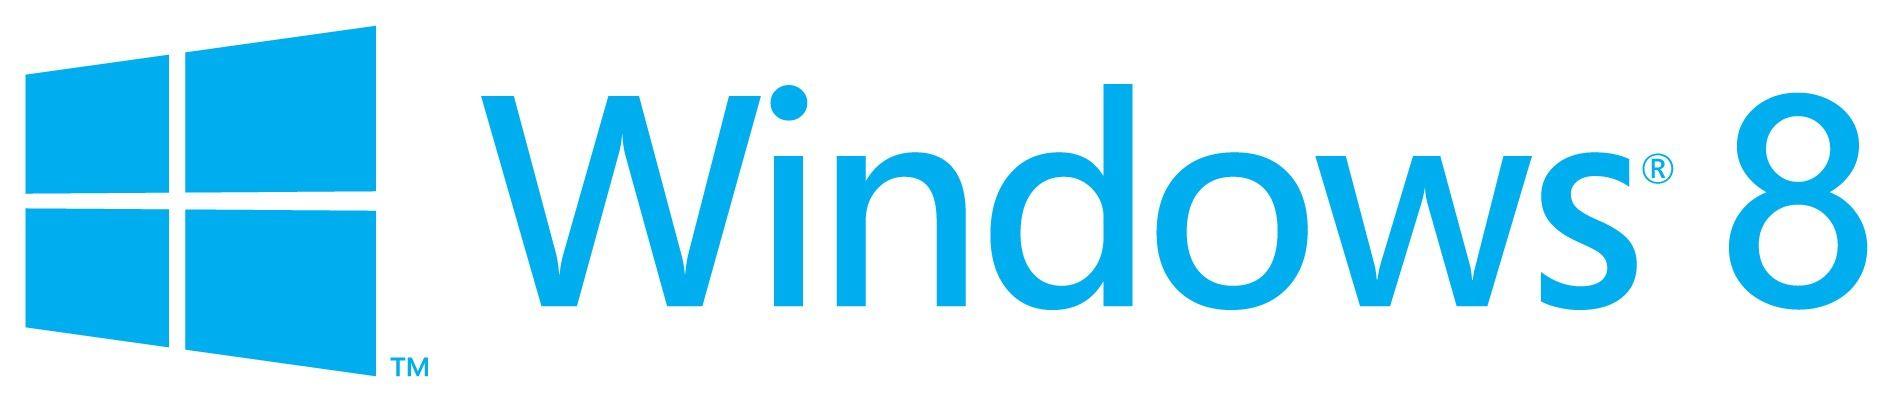 Windows 4 Logo - The Windows 8 Logo Is Here